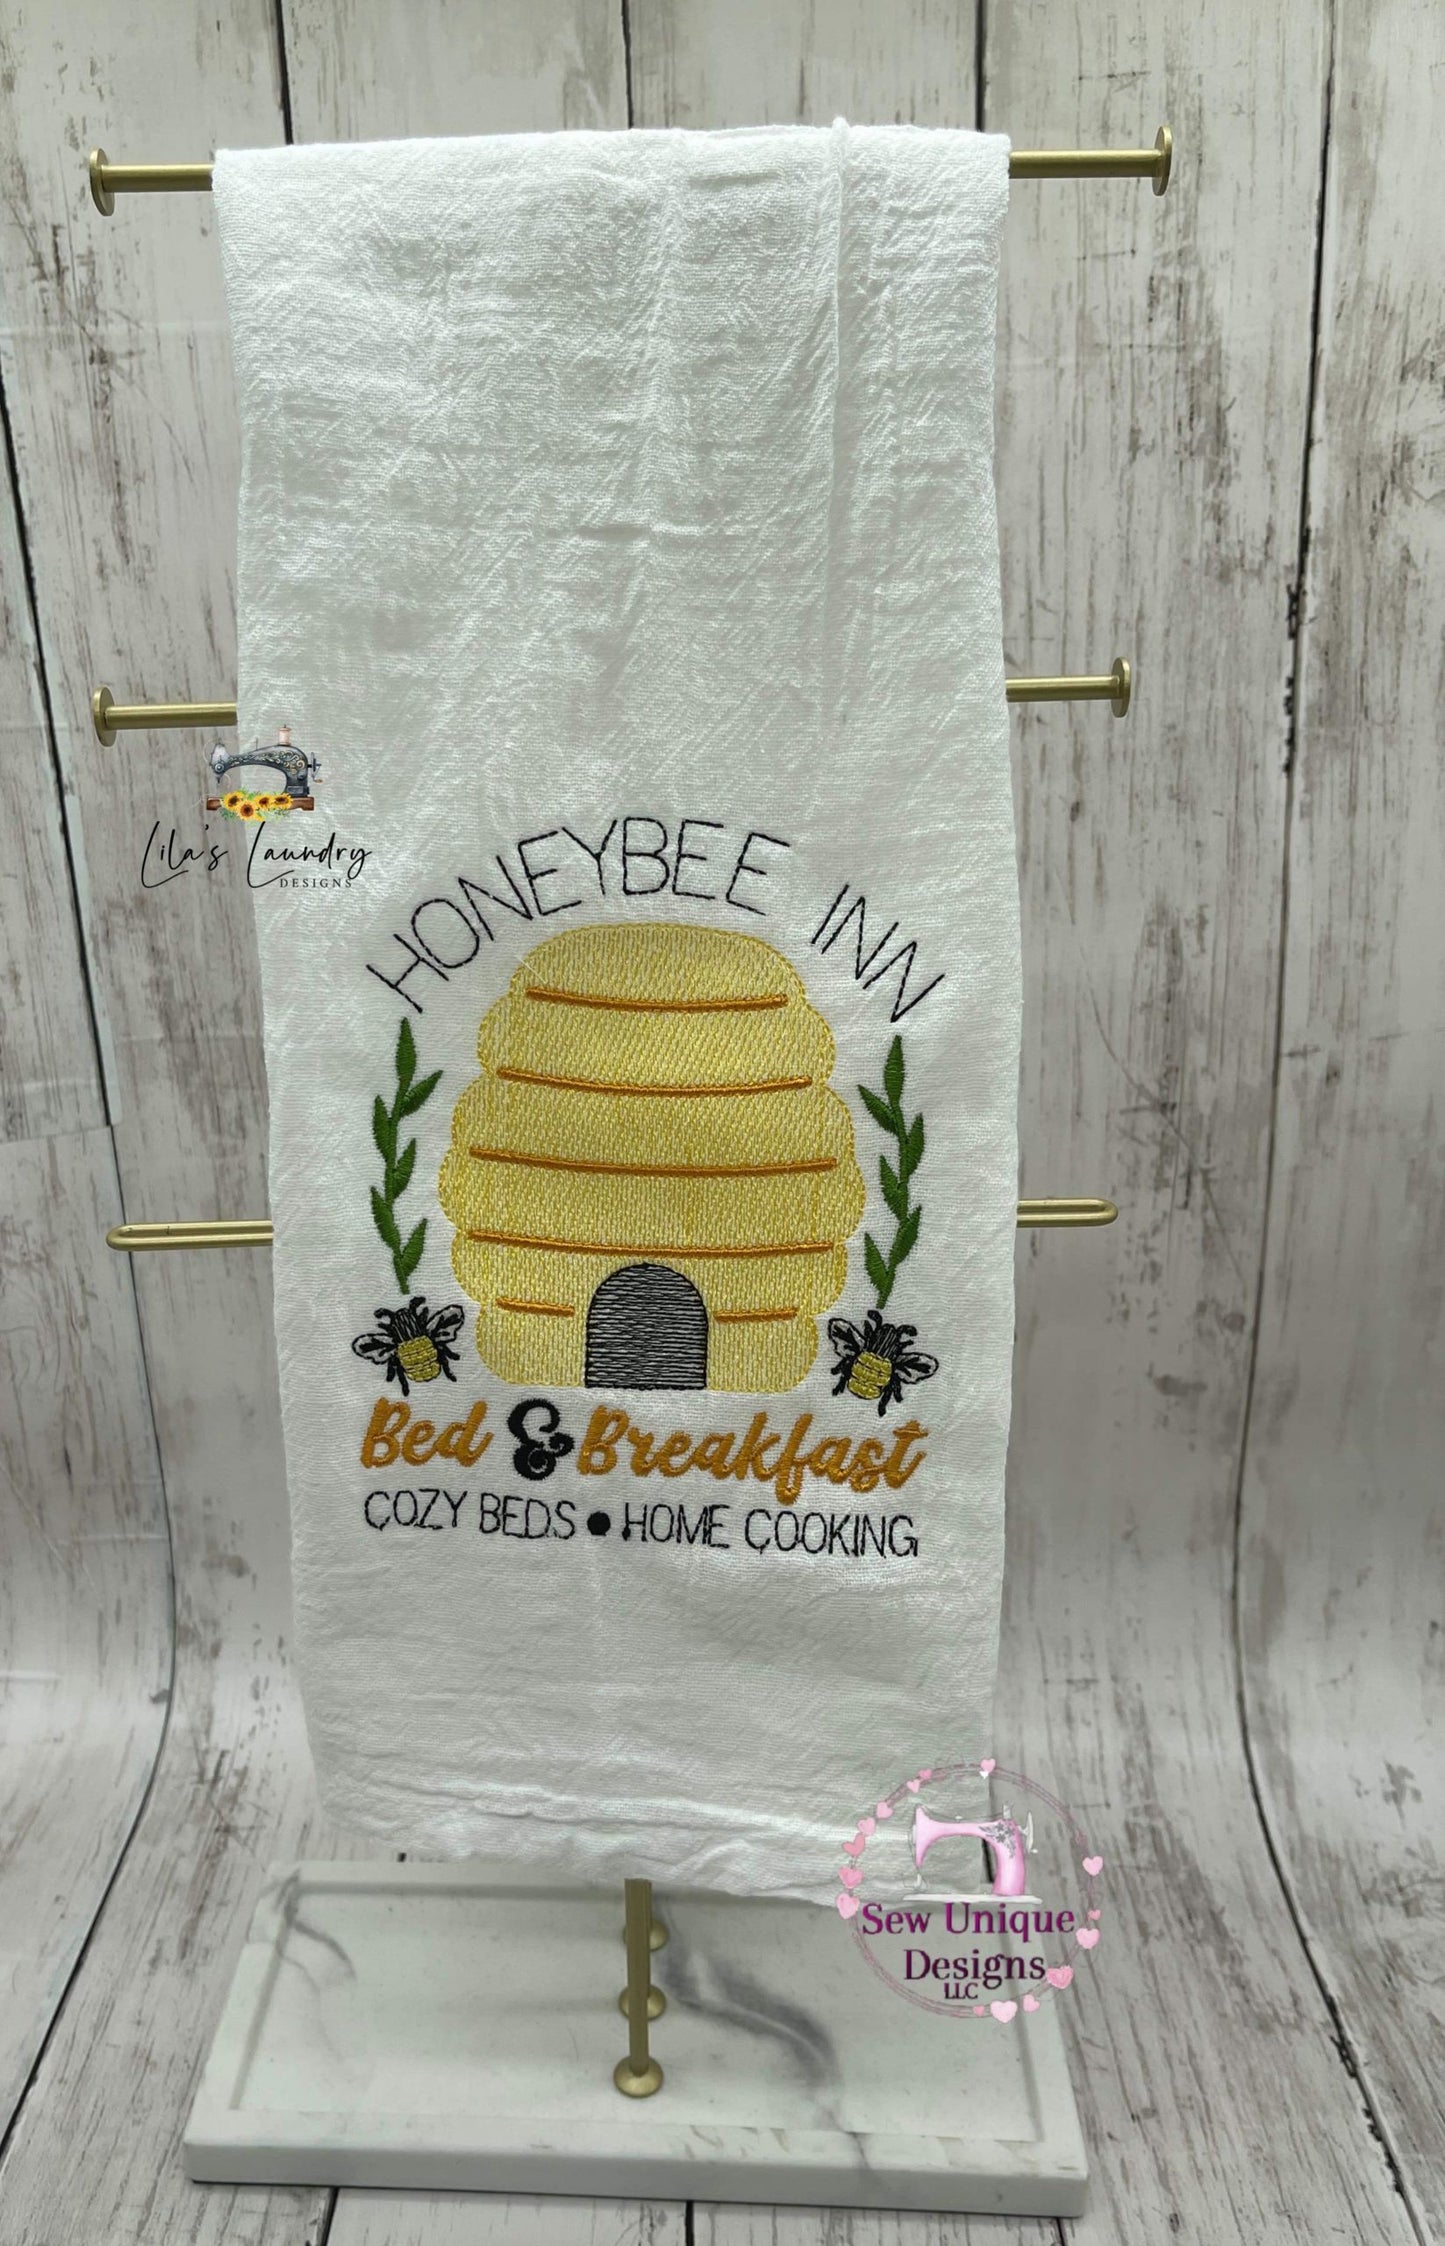 Honeybee Inn - 3 sizes- Digital Embroidery Design